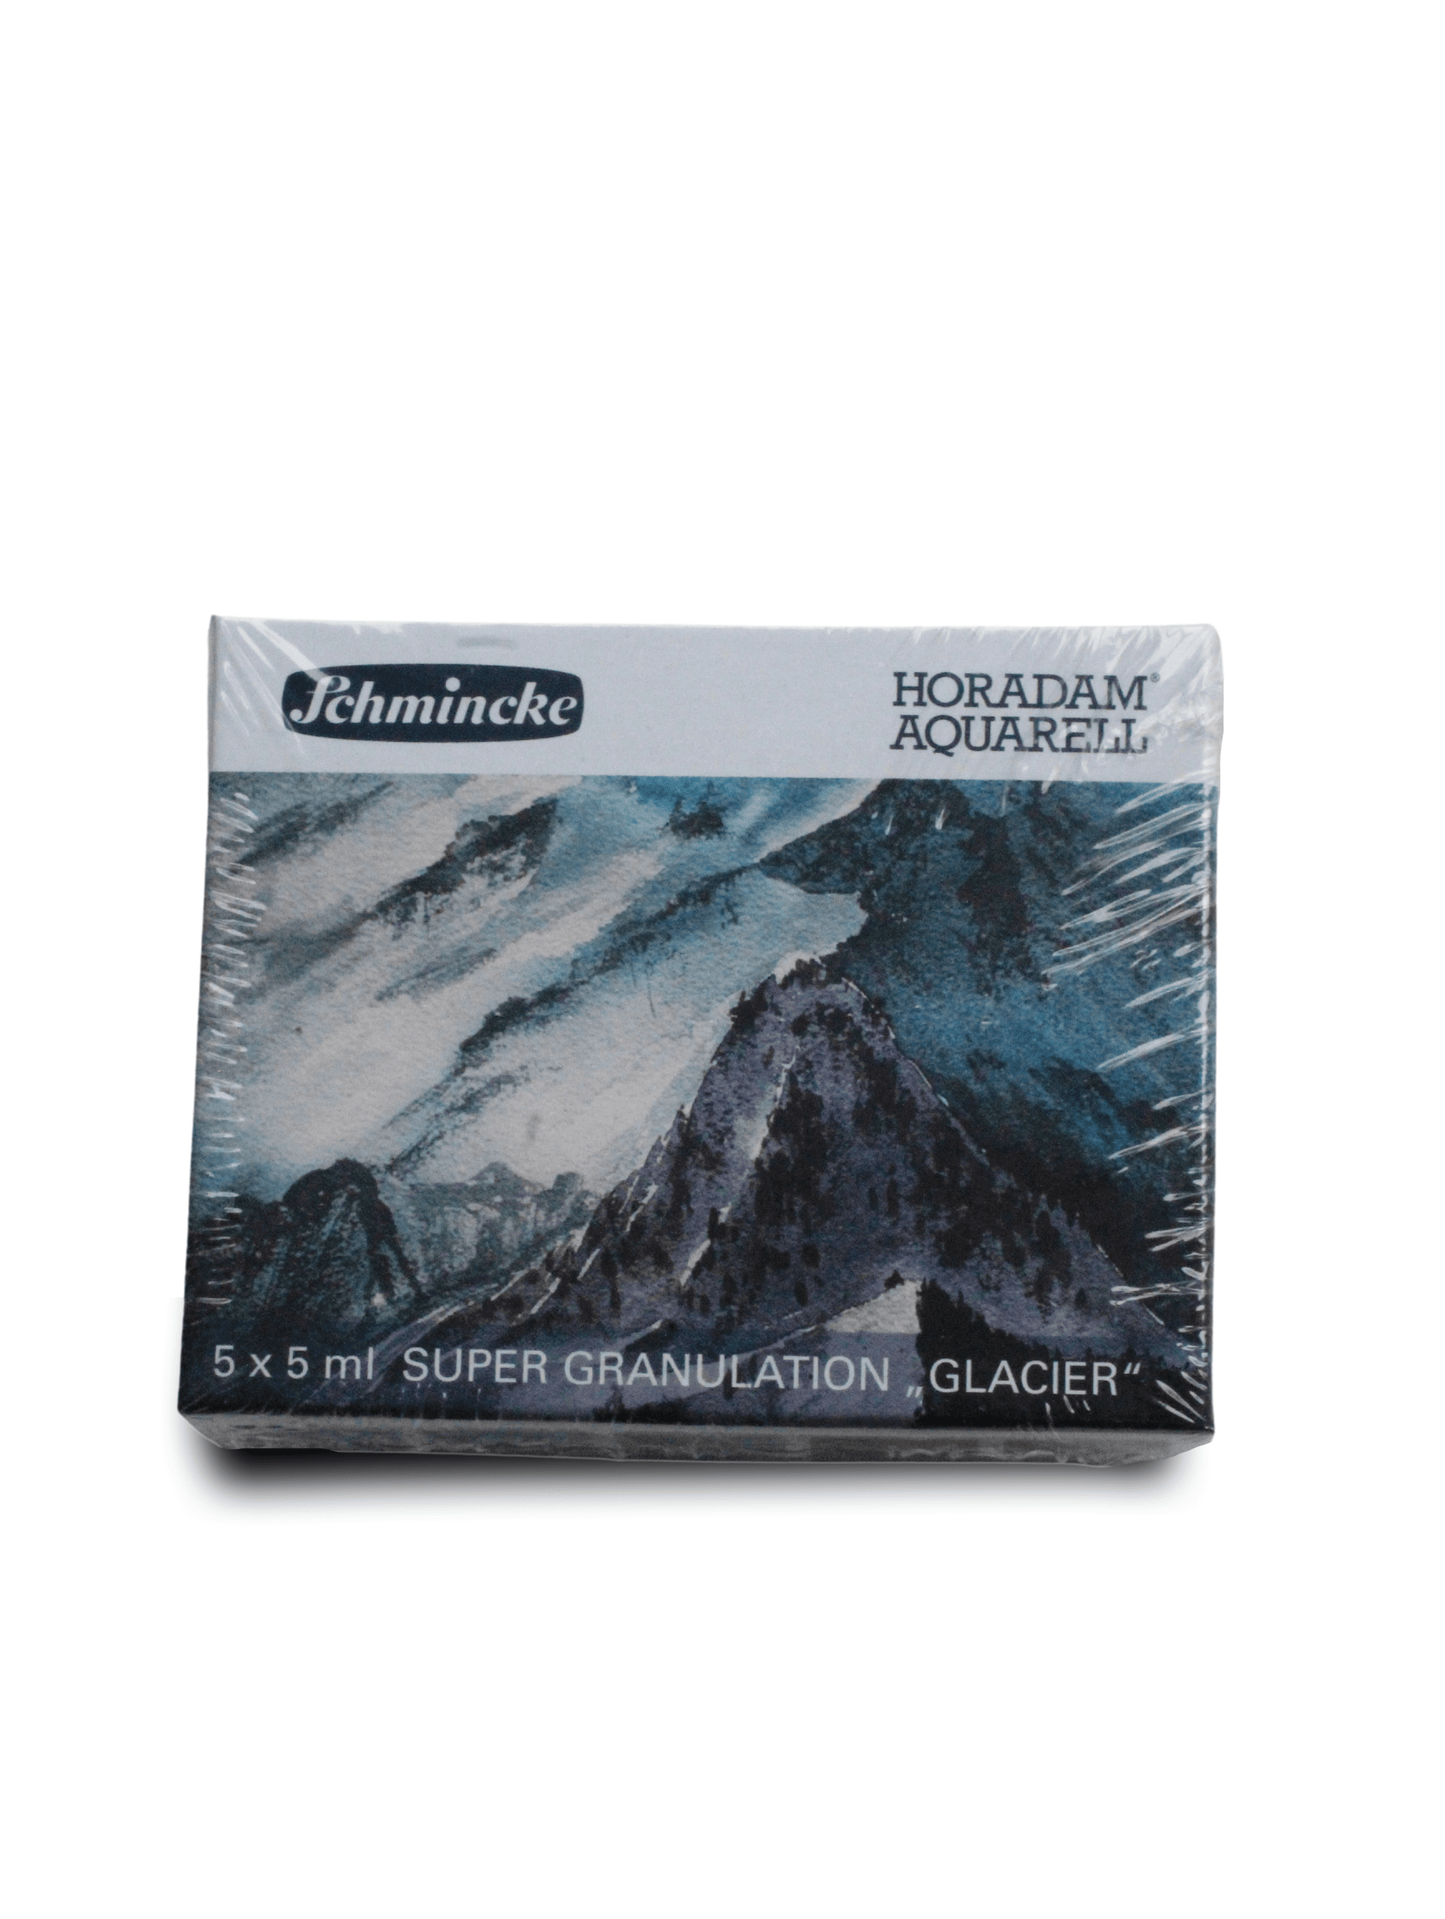 Schmincke WATERCOLOUR TUBE SET Glacier Schmincke - Horadam Aquarelle - Super Granulation Watercolours - Sets of 5x5mL Tubes